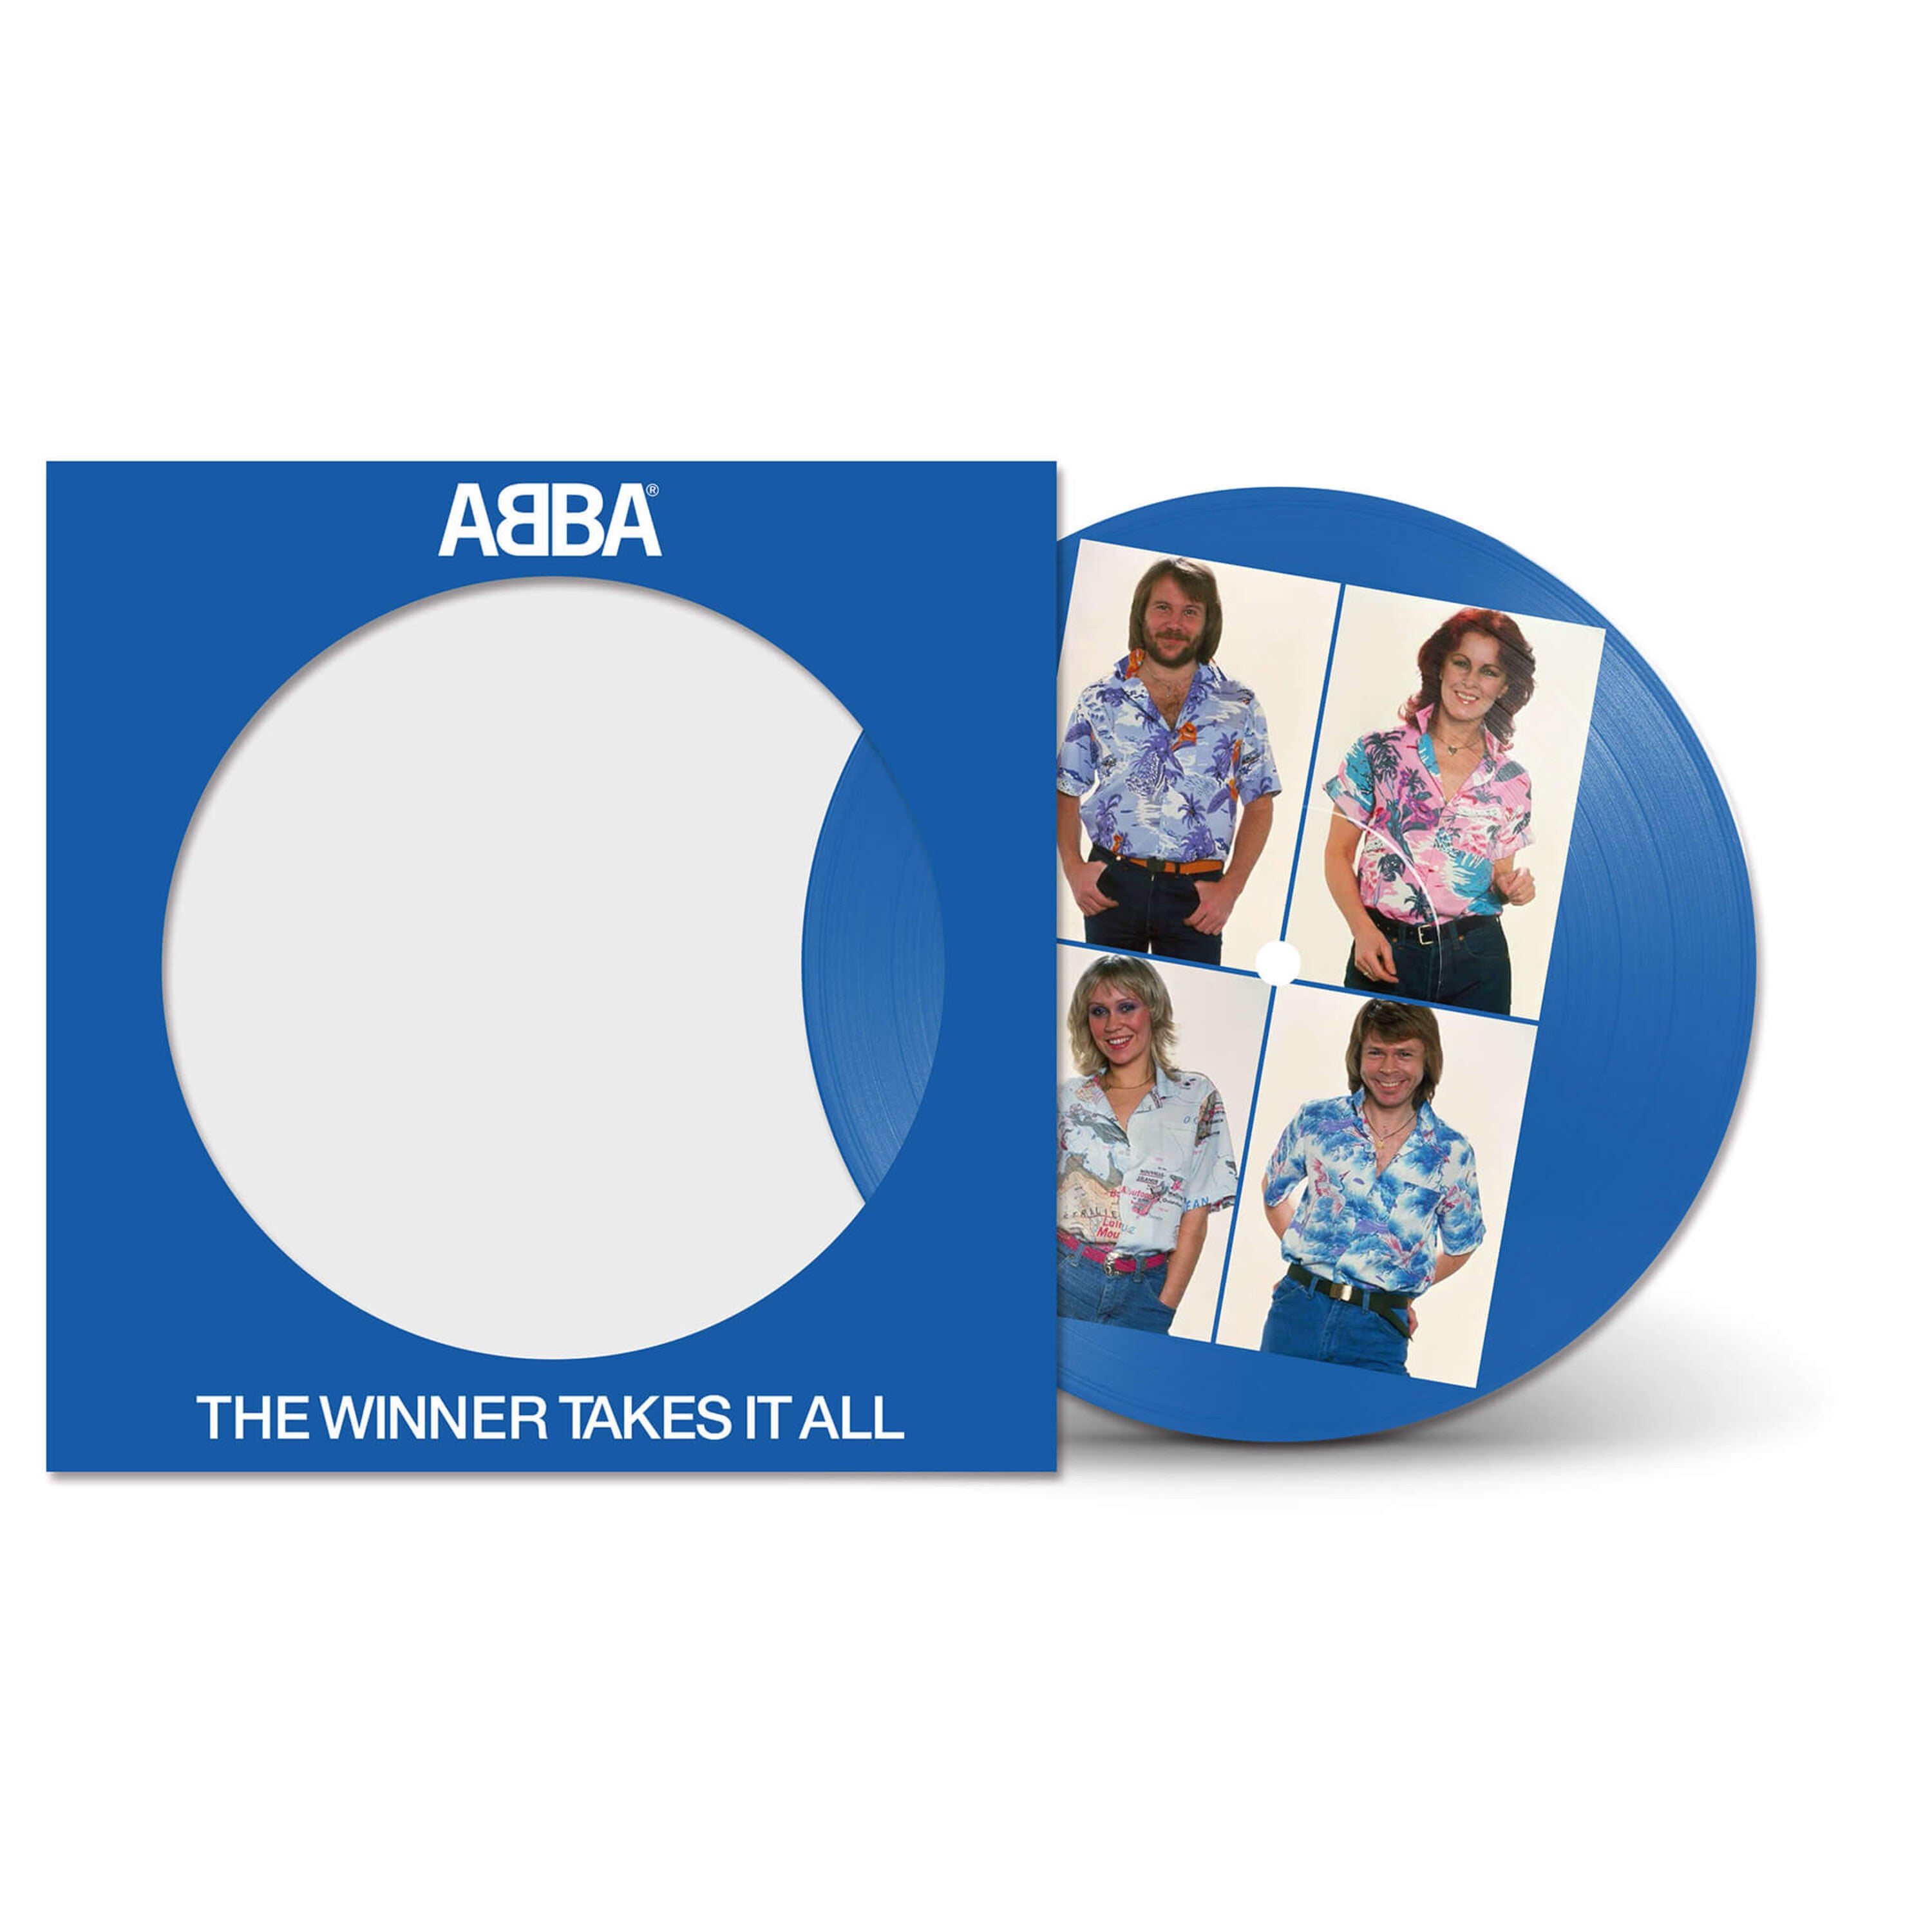 https://images.bravado.de/prod/product-assets/product-asset-data/abba/abba/products/134255/web/297069/image-thumb__297069__3000x3000_original/ABBA-The-Winner-Takes-It-All-40th-Anniversary-Ltd-Picture-Disc-Vinyl-134255-297069.jpg